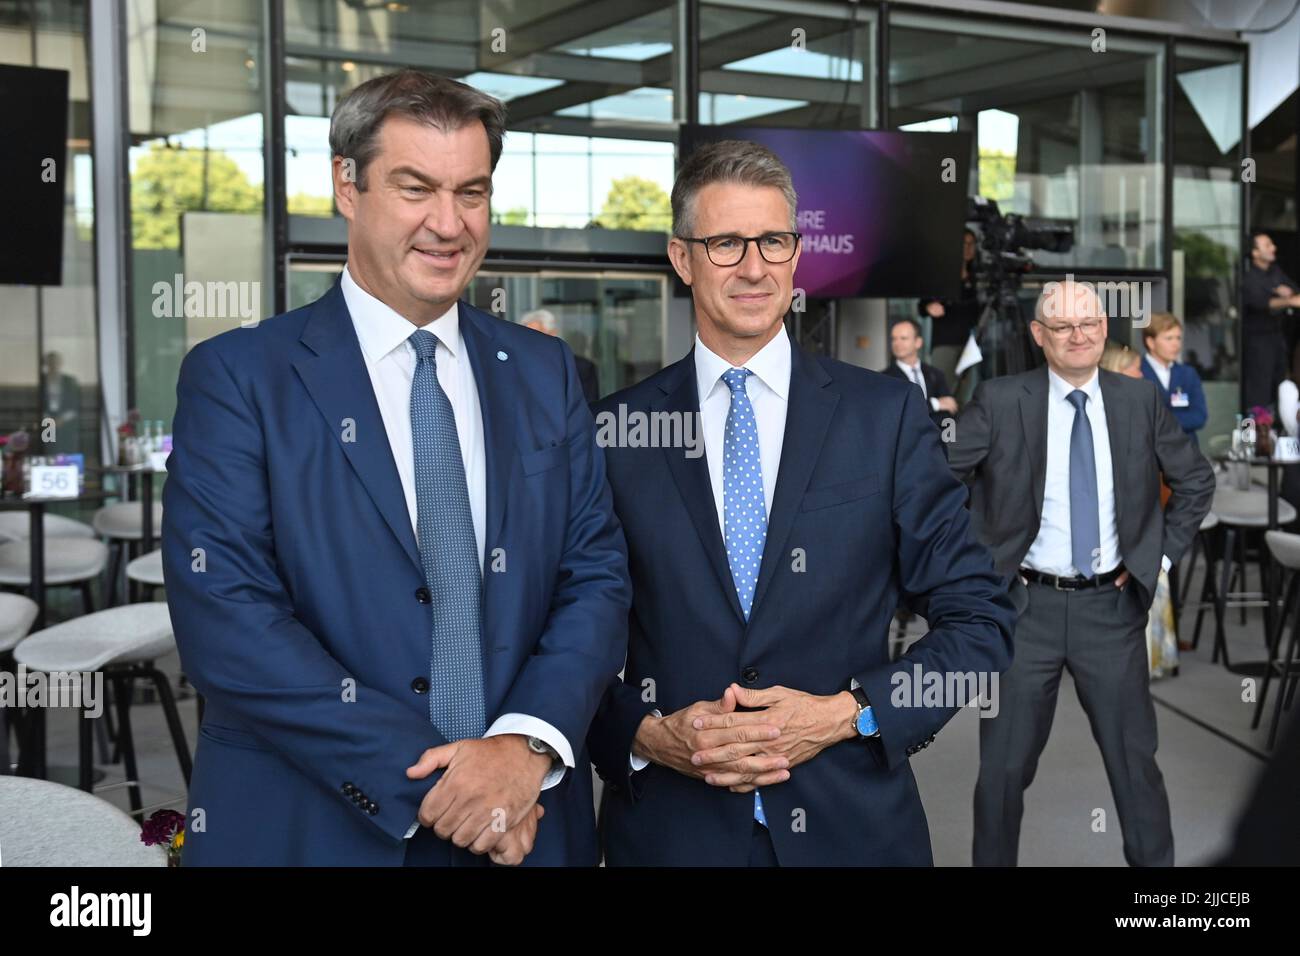 https://c8.alamy.com/comp/2JJCEJB/from-left-stefan-quandt-with-markus-soeder-prime-minister-of-bavaria-and-csu-chairman-anniversary-event-50-years-bmw-high-rise-on-july-22nd-2022-in-munich-sven-simon-fotoagentur-gmbh-co-pressefoto-kg-prinzess-luise-str-41-45479-m-uelheim-r-uhr-tel-02089413250-fax-02089413260-gls-bank-blz-430-609-67-account-4030-025-100-iban-de75-4306-0967-4030-0251-00-bic-genodem1gls-wwwsvensimonnet-2JJCEJB.jpg